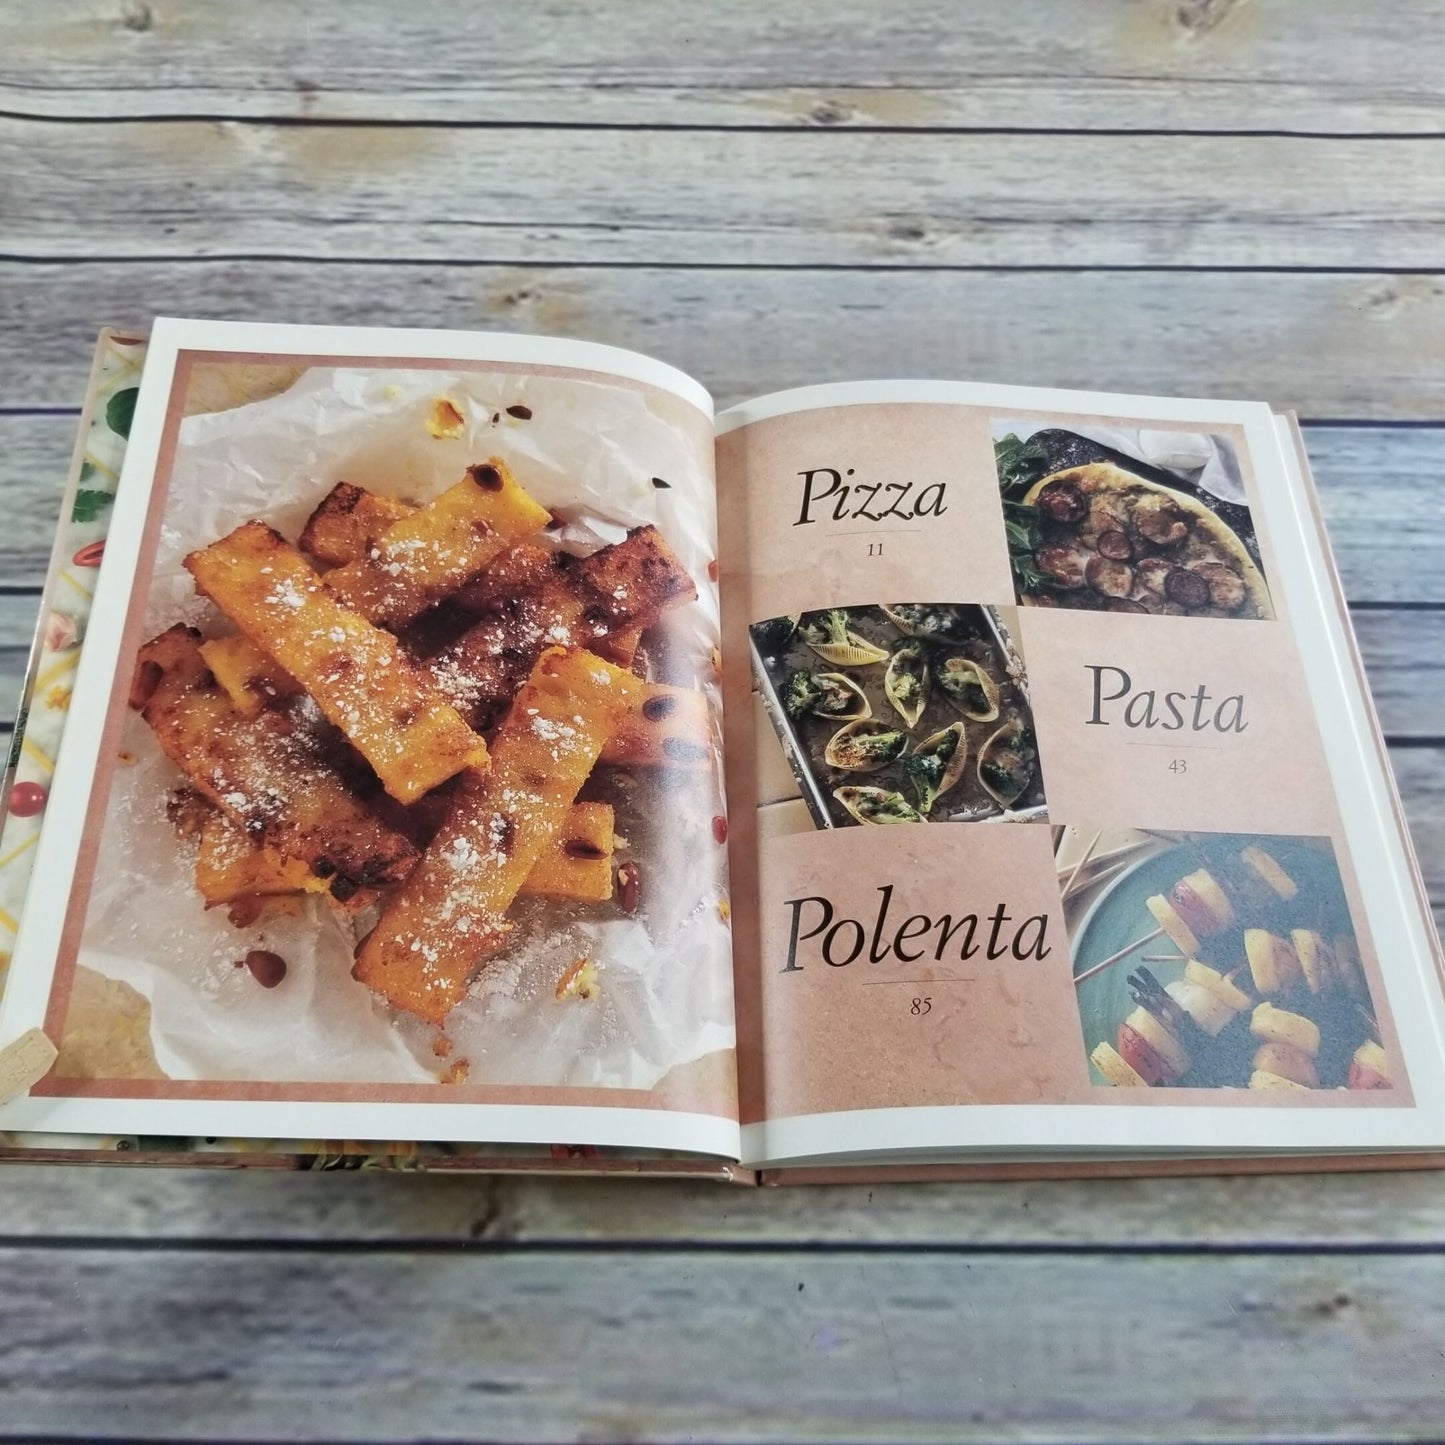 Vintage Italian Cookbook Vegetarian Pizza Pasta and Polenta 1995 Hardcover Ursula Ferrigno Italian Vegetarian Recipes